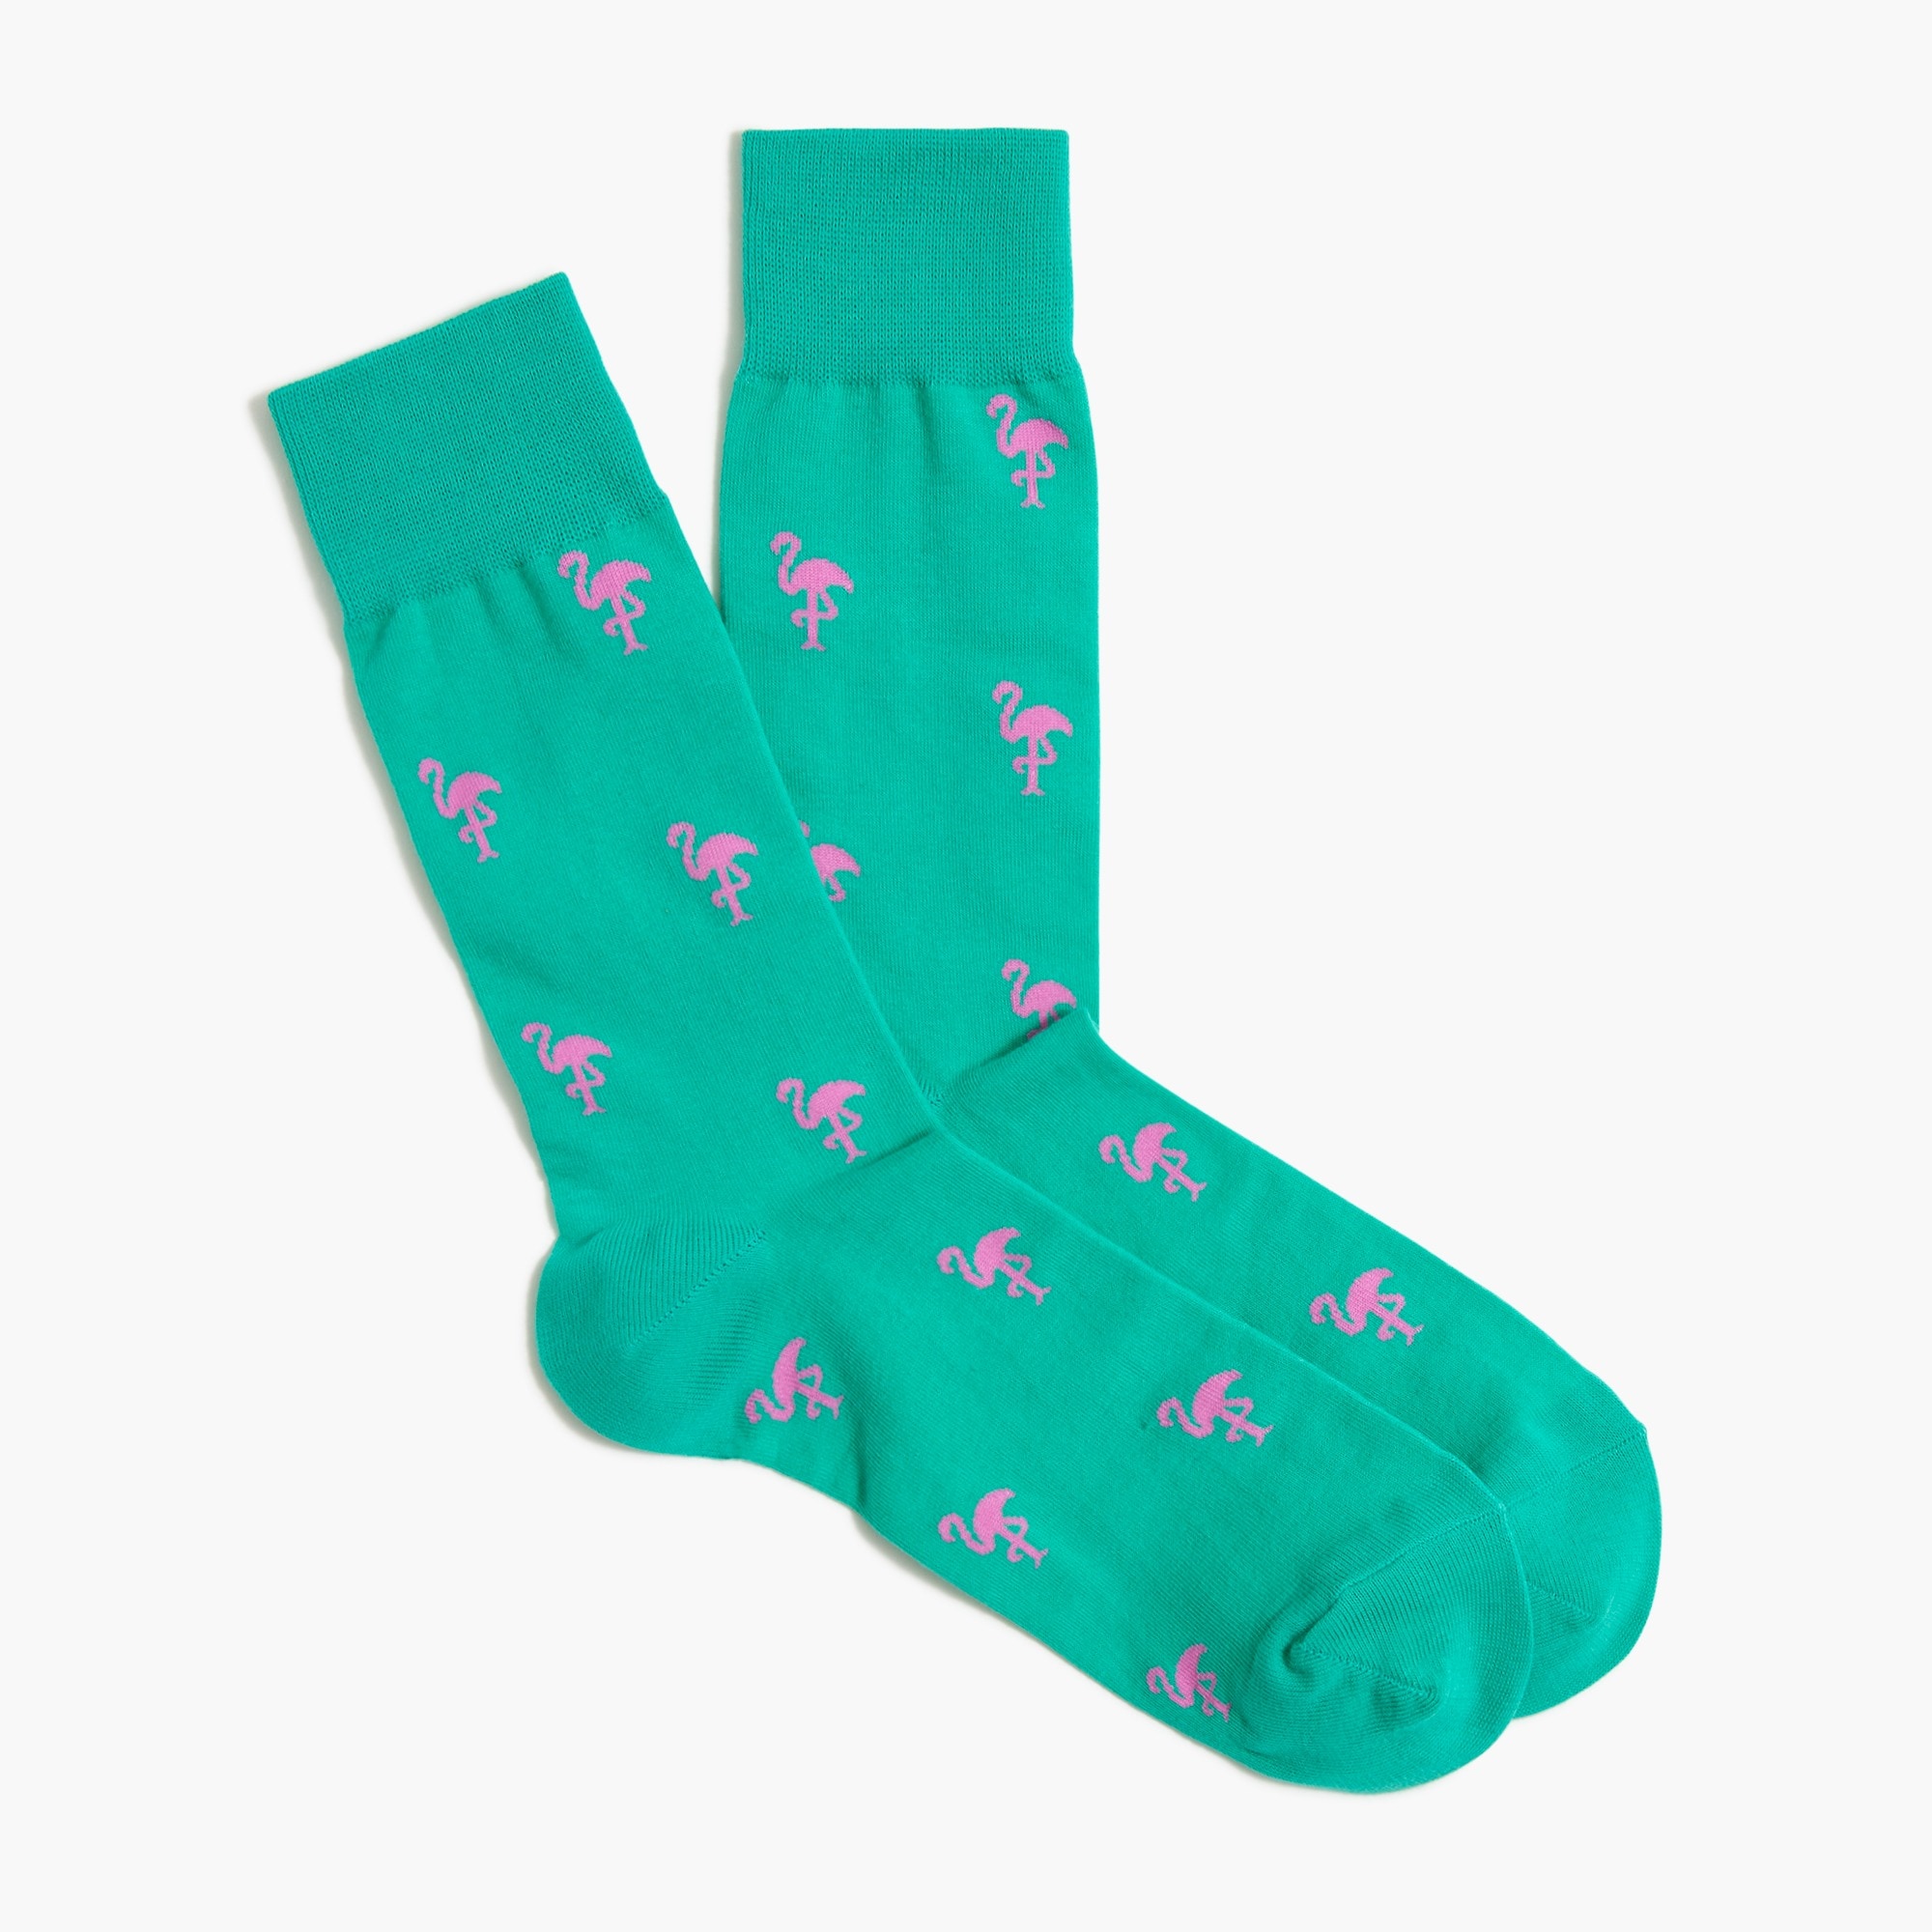 Jcrew Flamingo socks